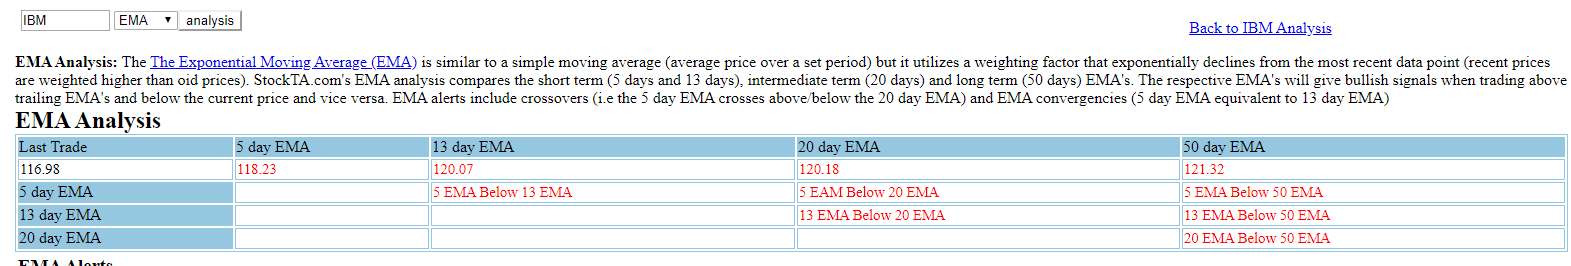 IBM Stock Price Forecast - EMA indicators